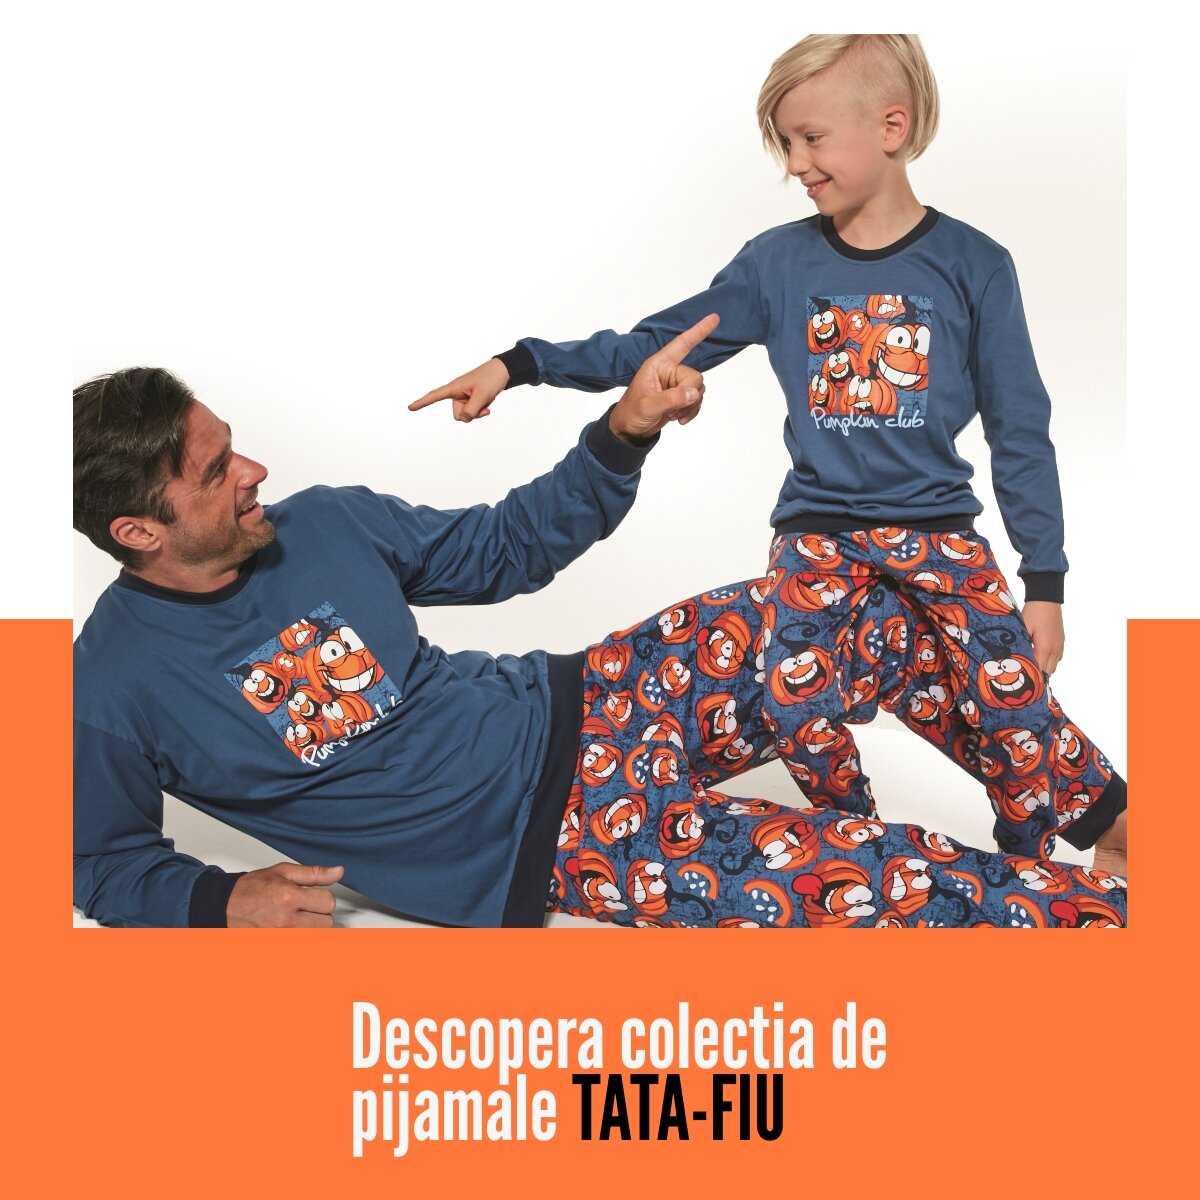 Pijamale tata-fiu